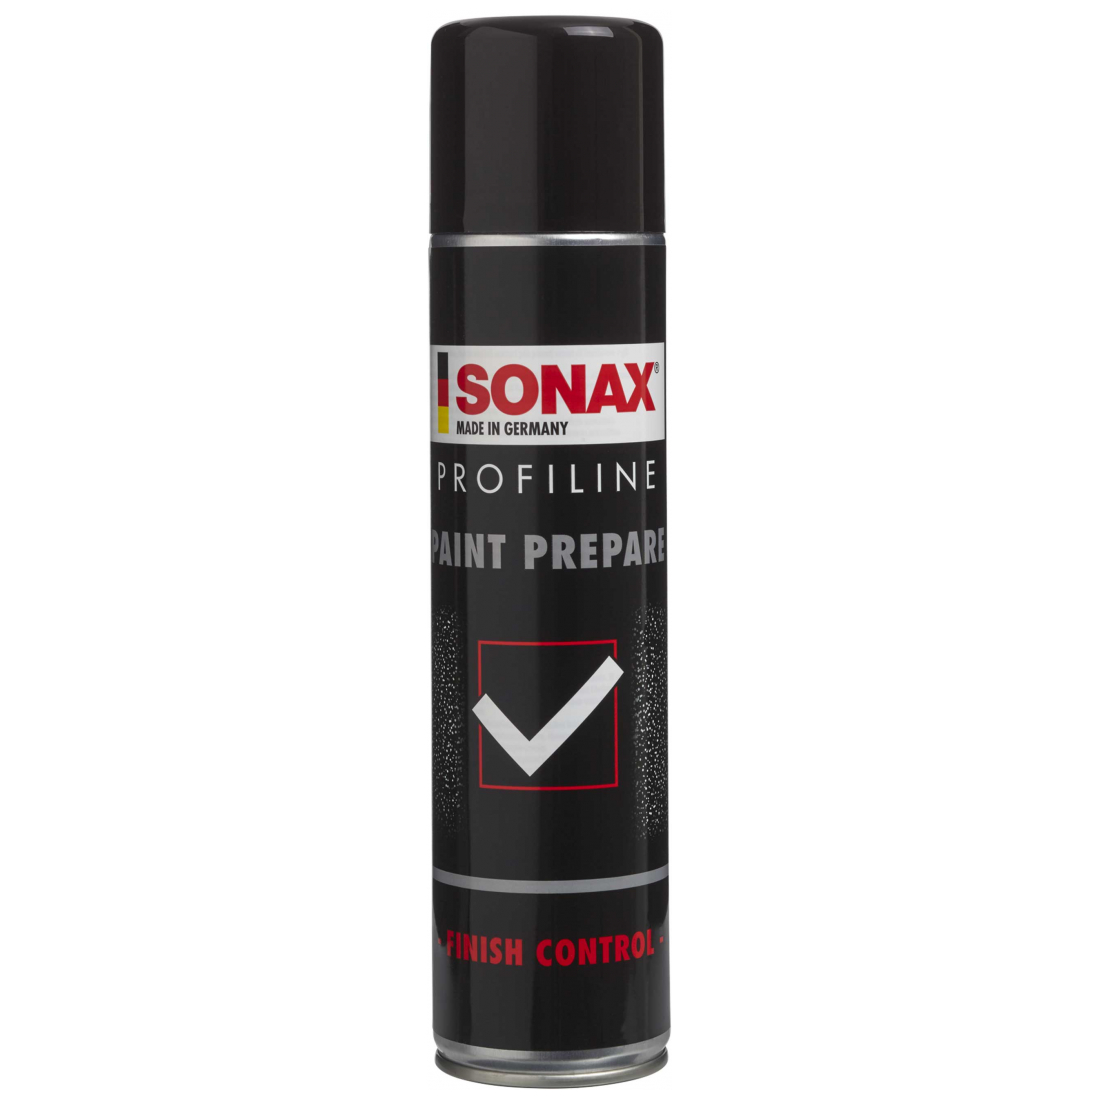 SONAX PROFILINE Paint Prepare (Finish Control) Entfetter 400 ml